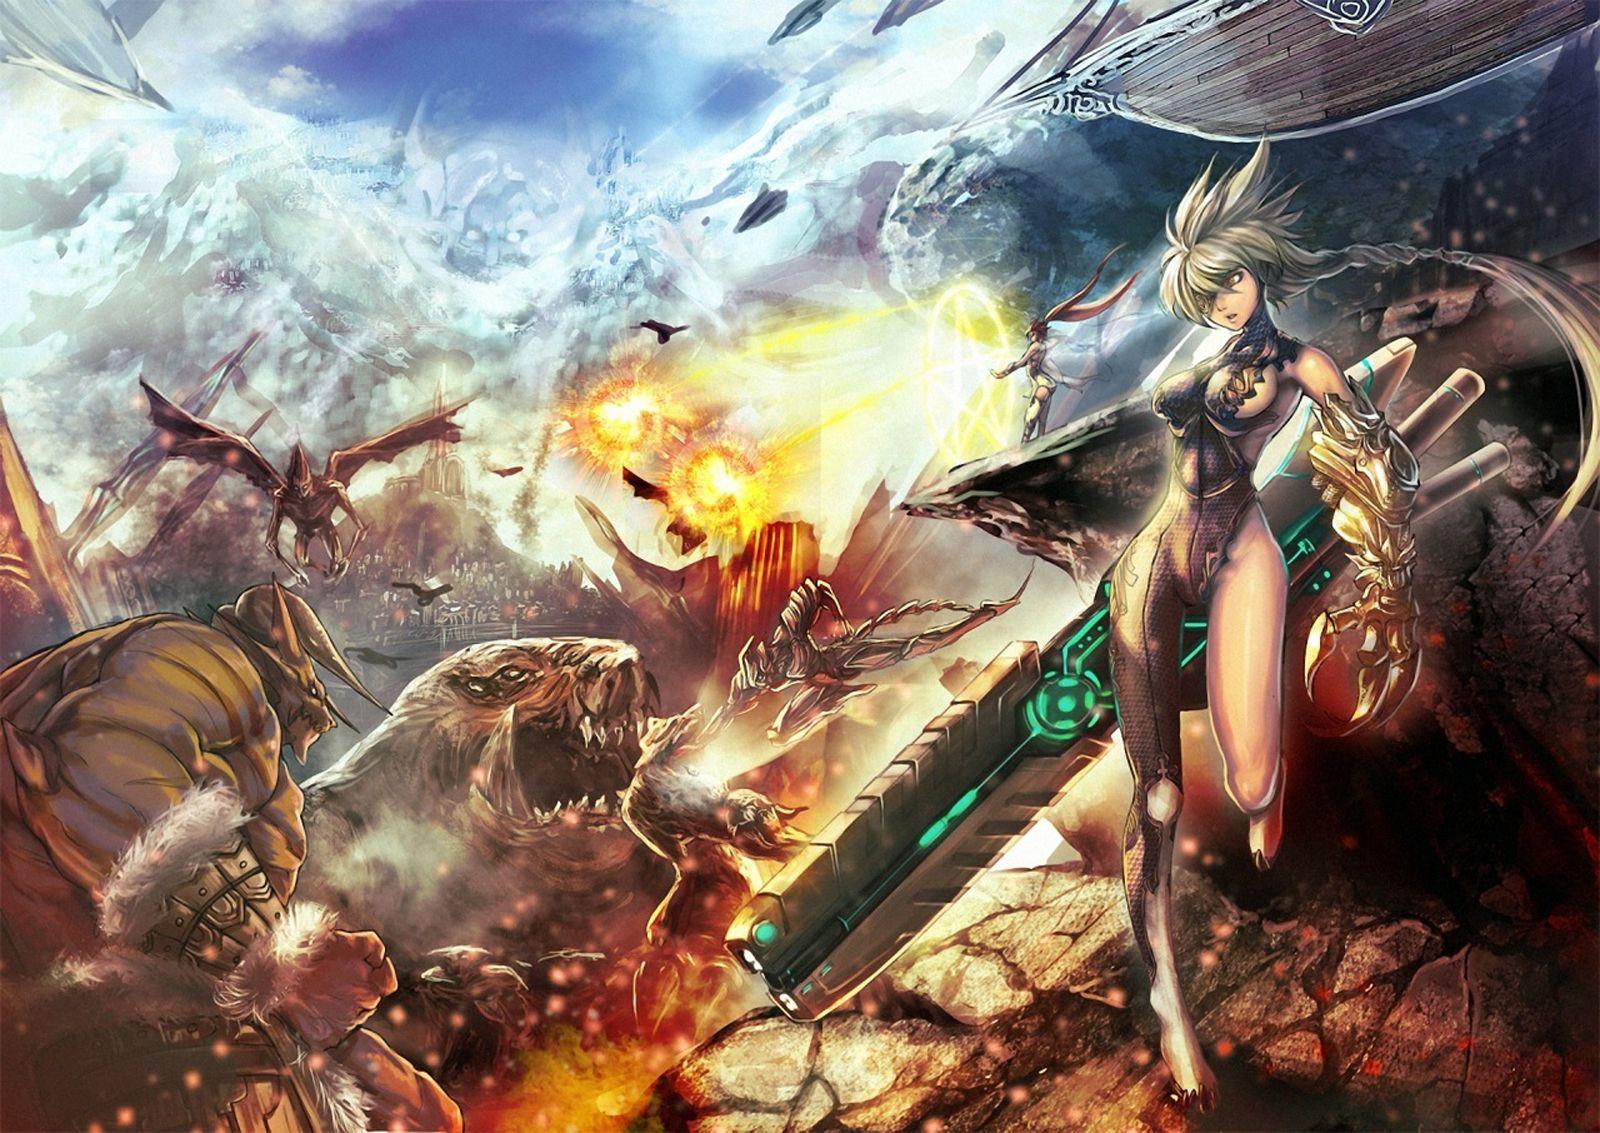 hd wallpaper: Epic Fantasy Battle 2047